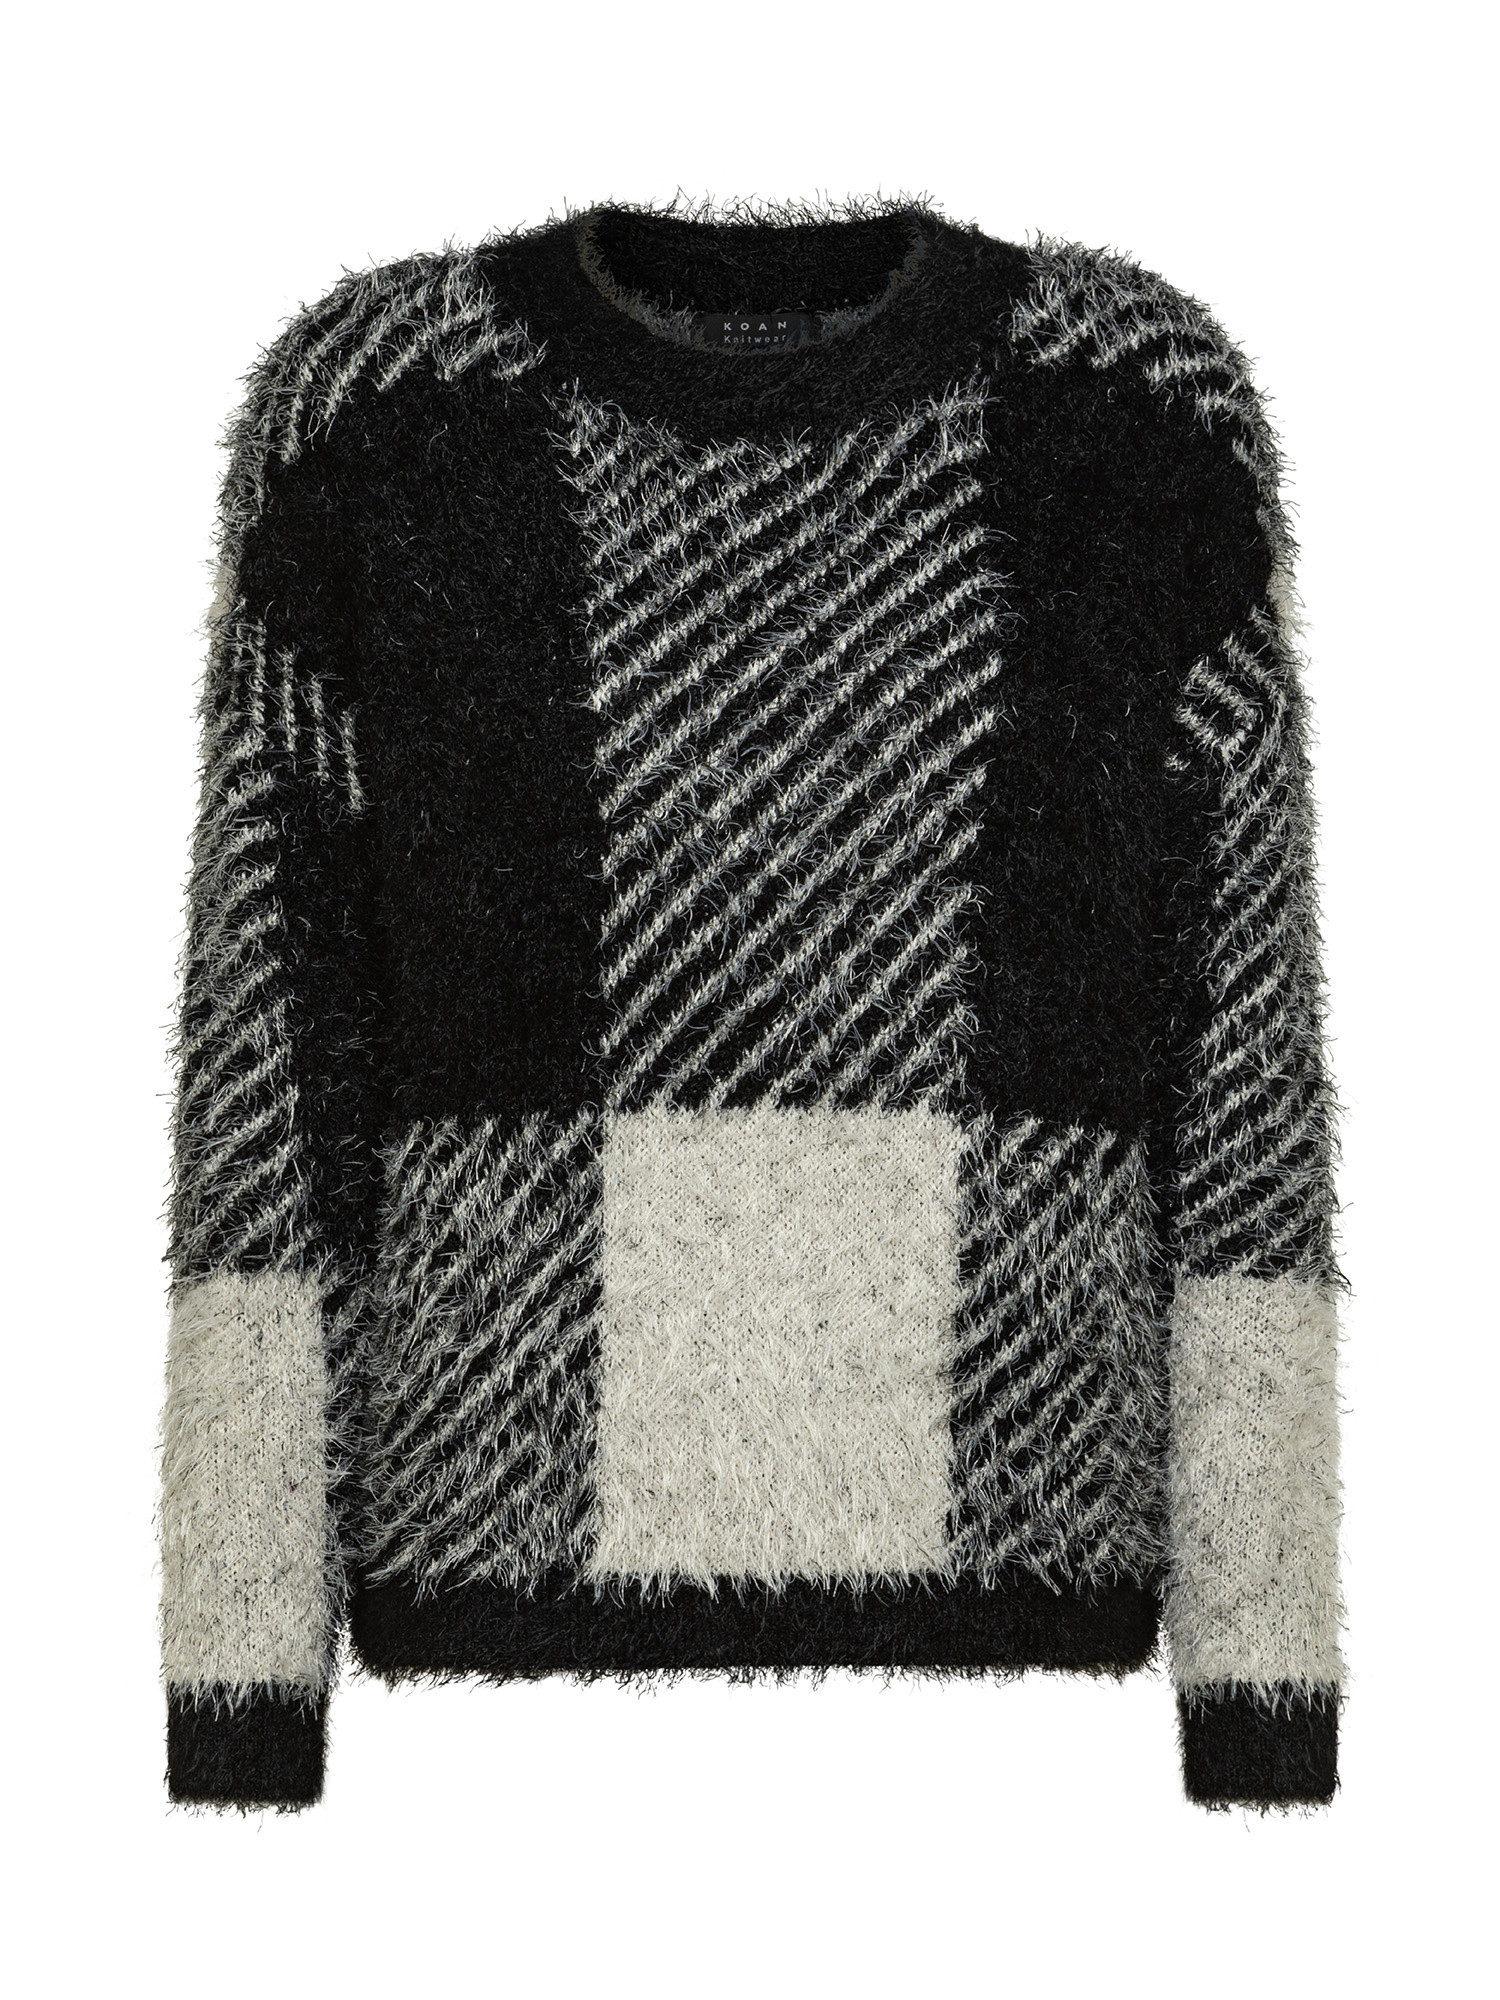 Koan - Checked crewneck pullover, Black, large image number 0